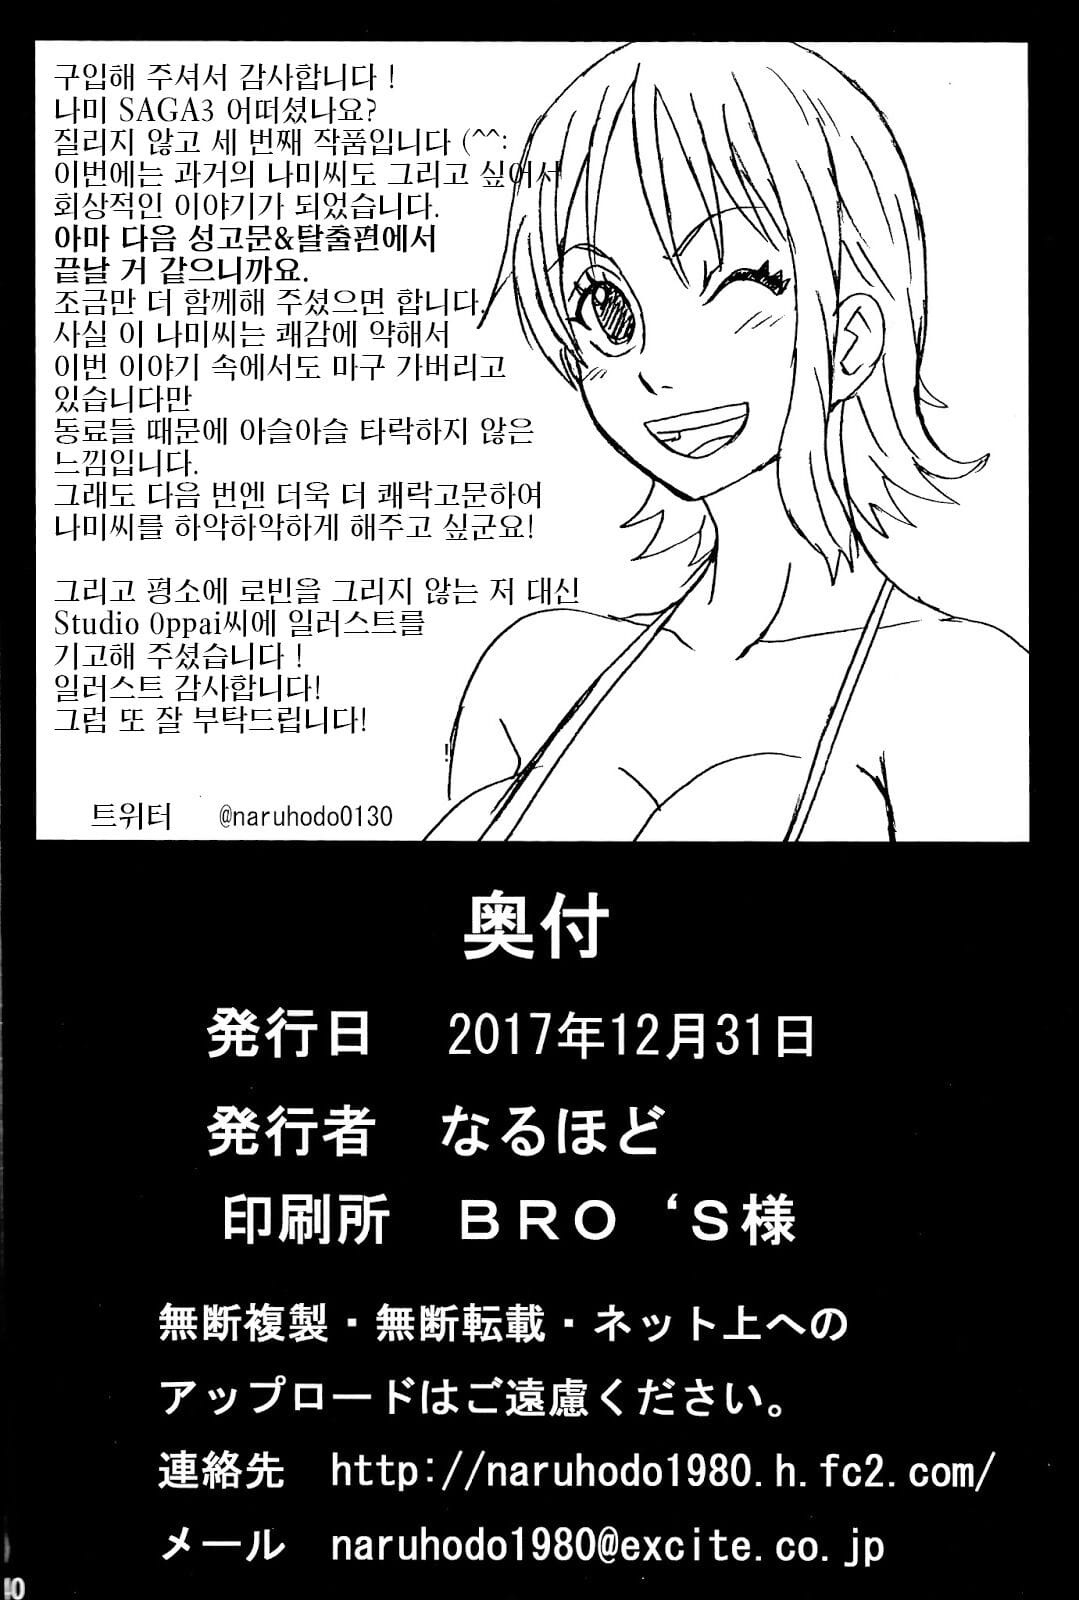 Naruho-dou Naruhodo Nami SAGA 3 Full Color One Piece Spanish m4nd4l0r3 Digital - part 3